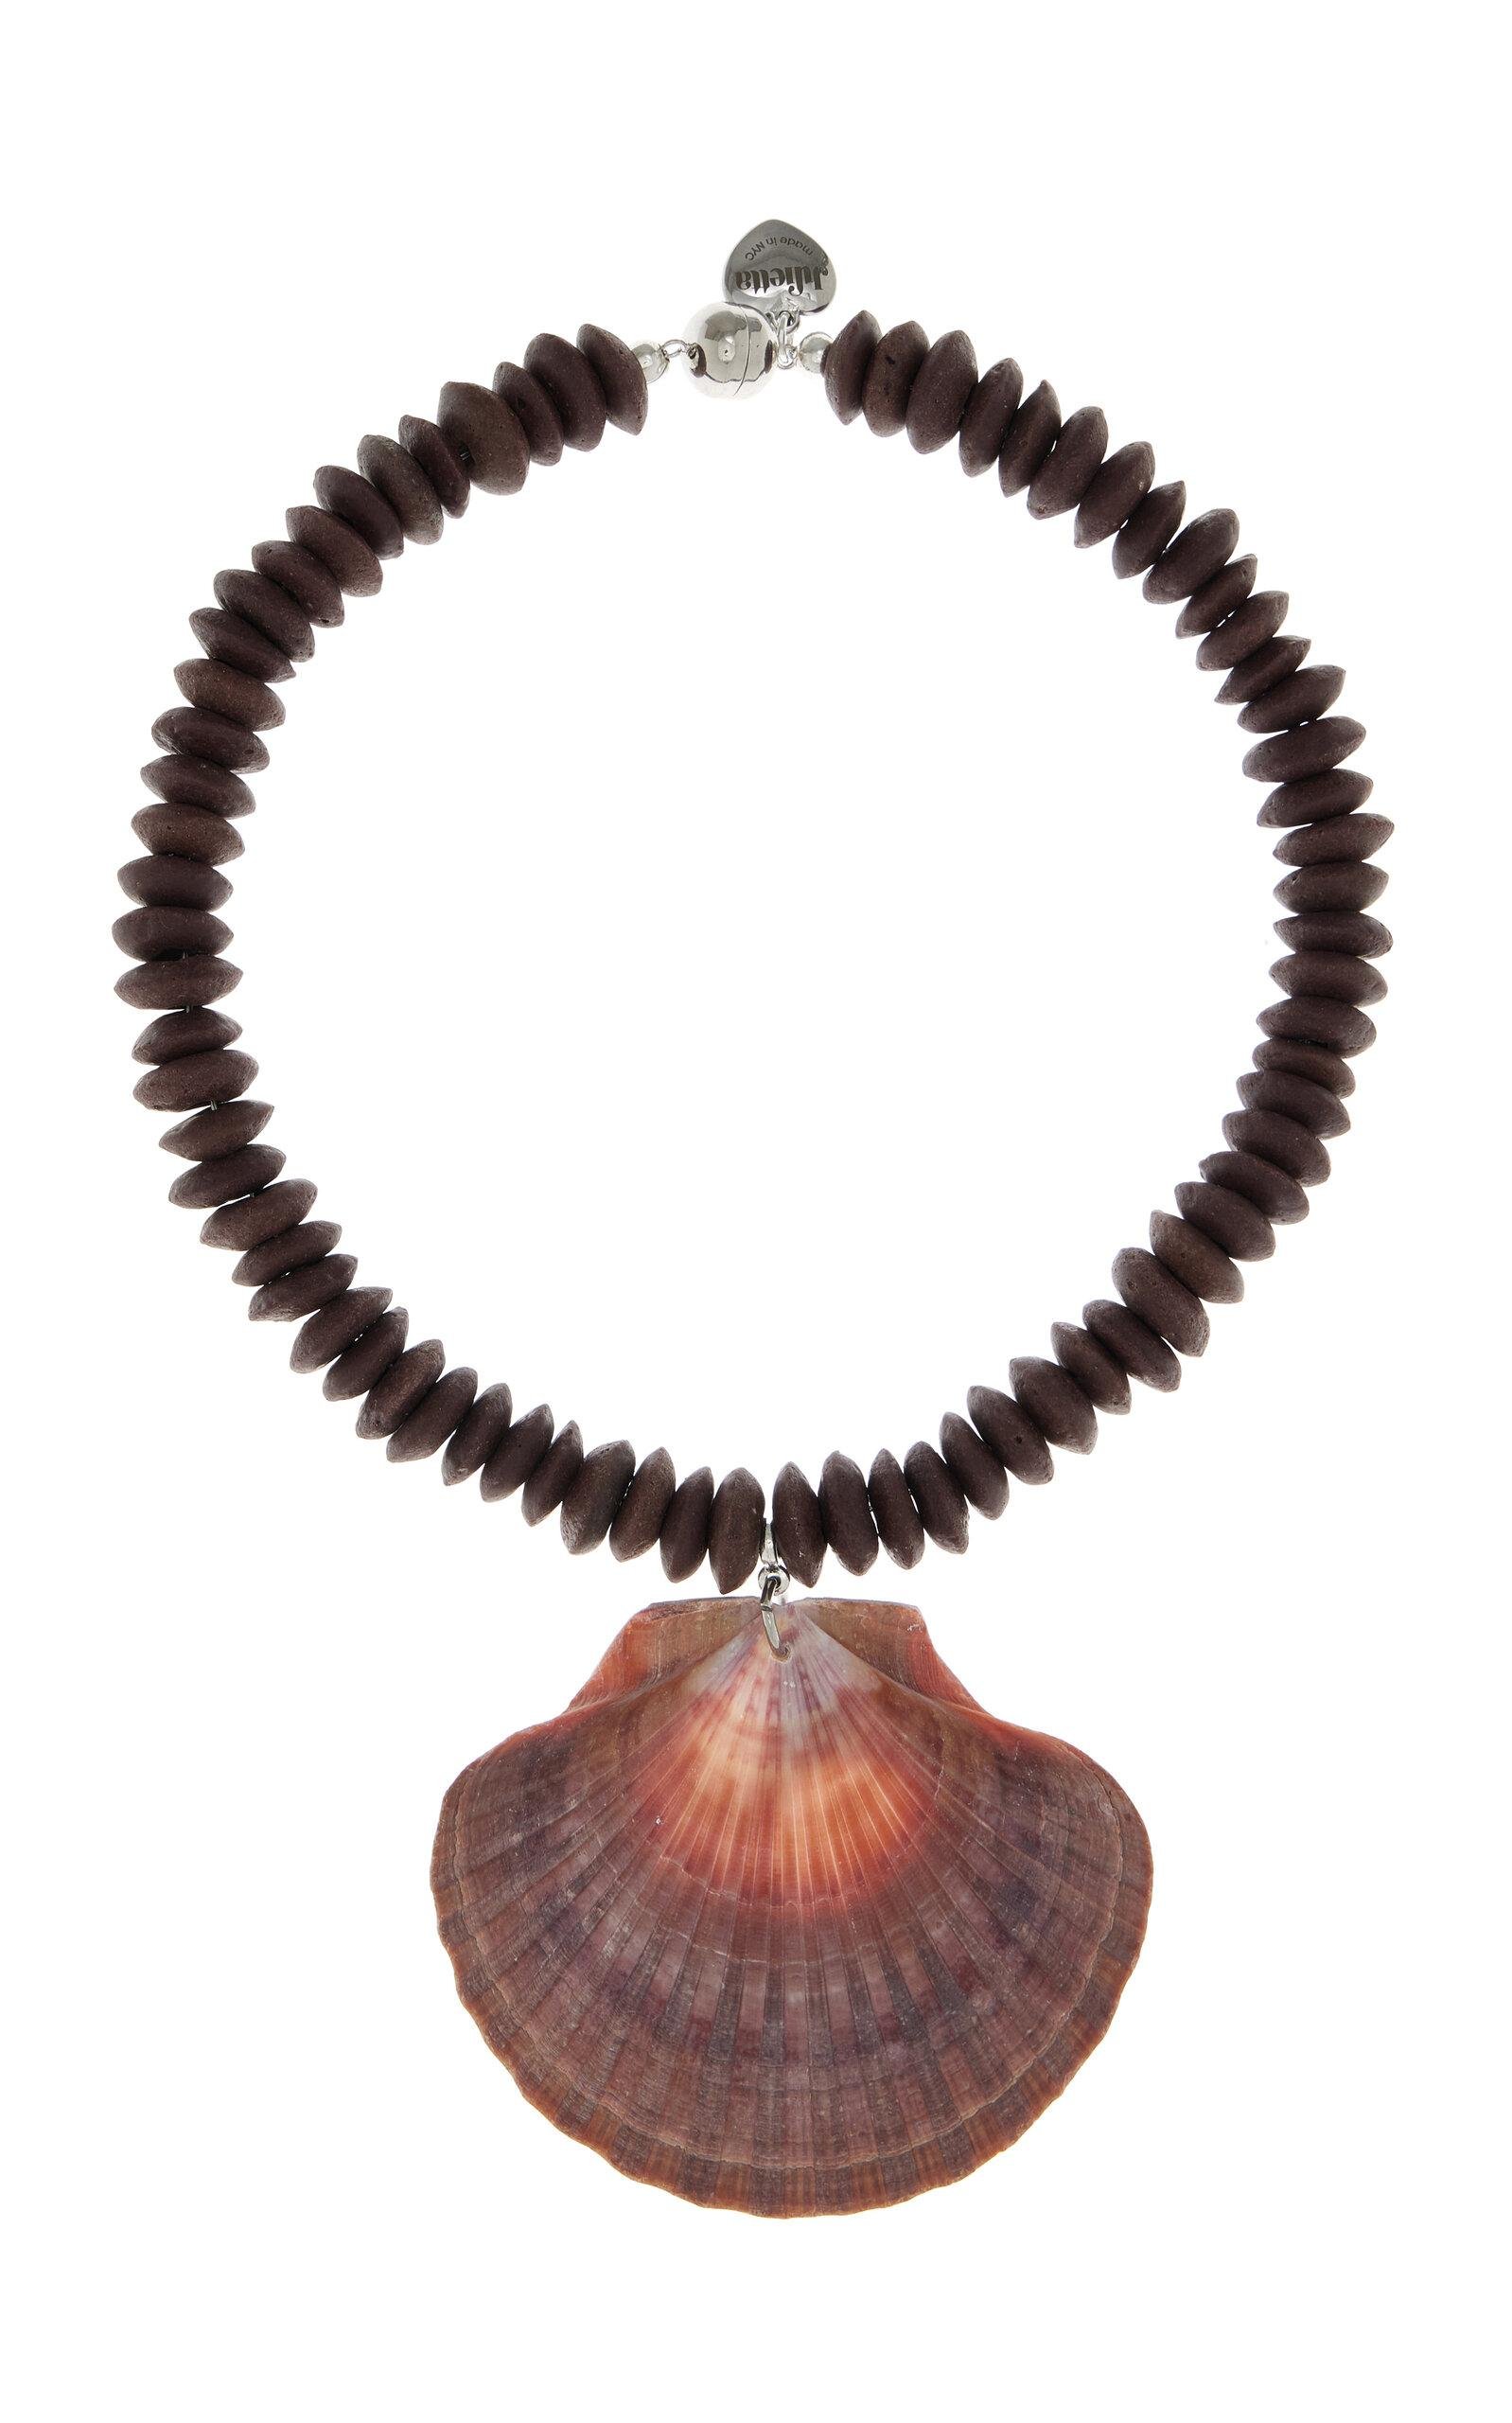 Julietta - Exclusive Beaded Shell Necklace - Brown - OS - Moda Operandi - Gifts For Her by JULIETTA